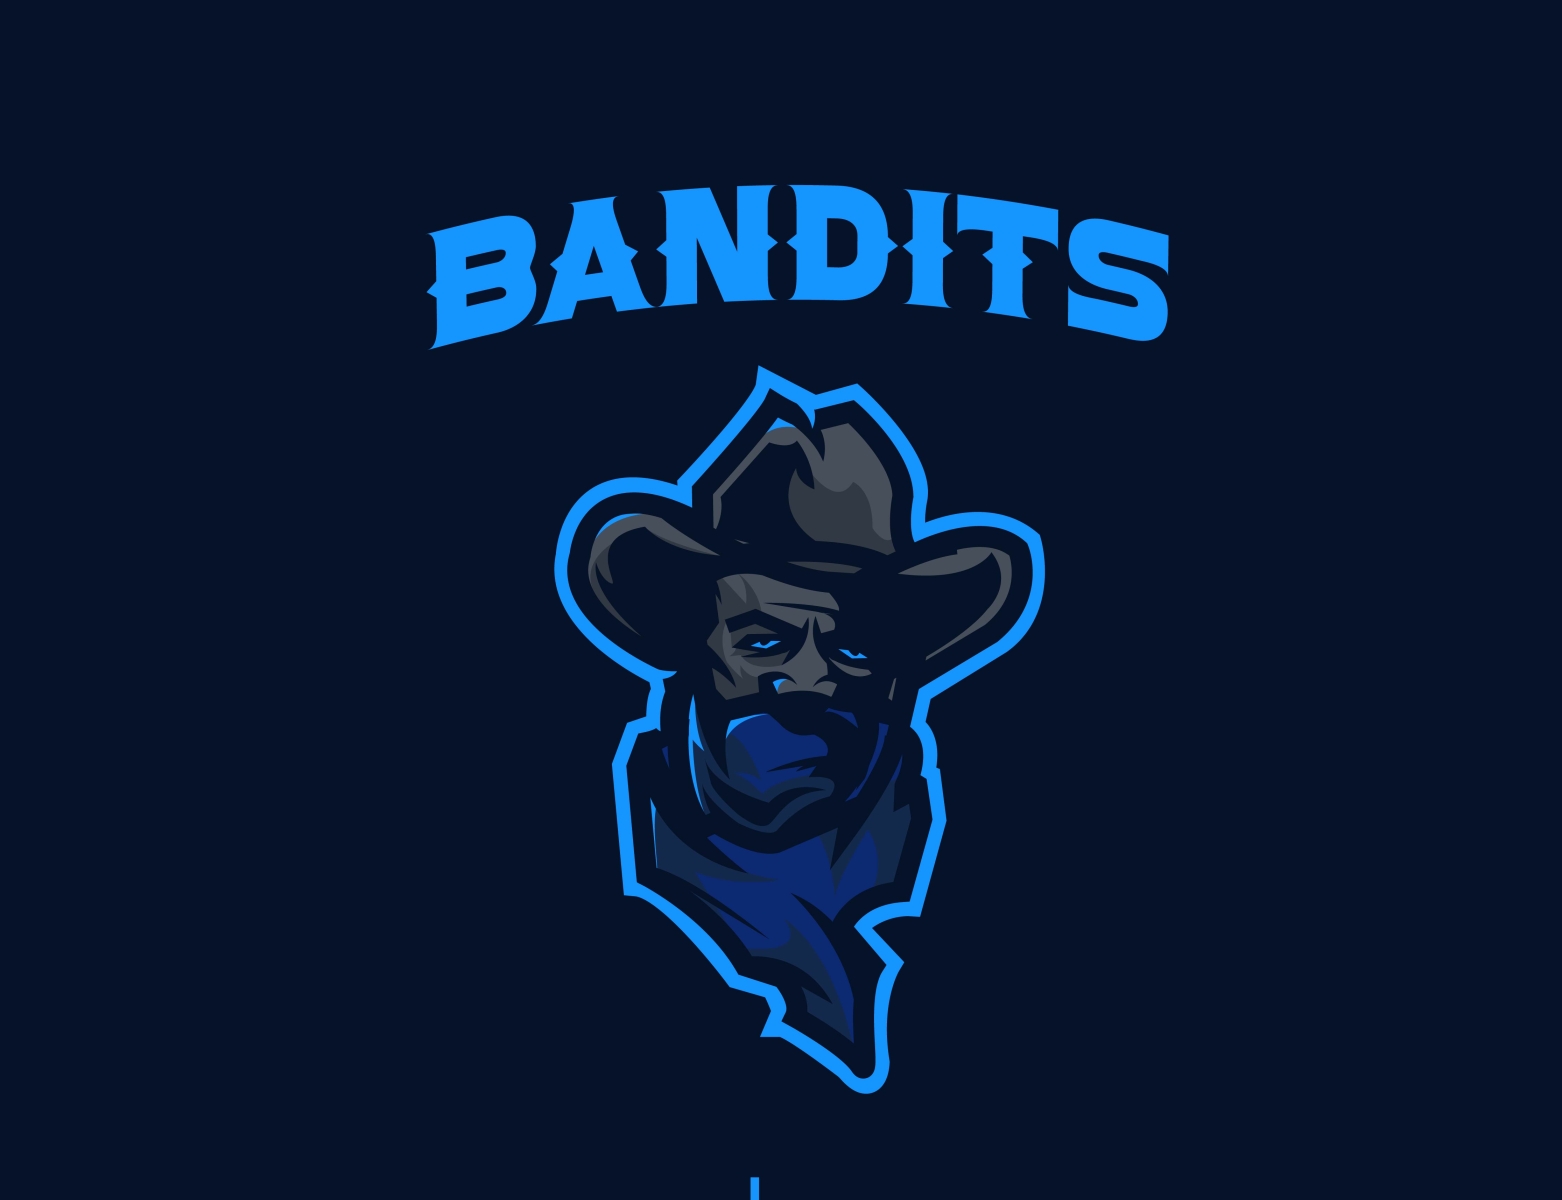 Bandits team logo by Balog Kristóf on Dribbble